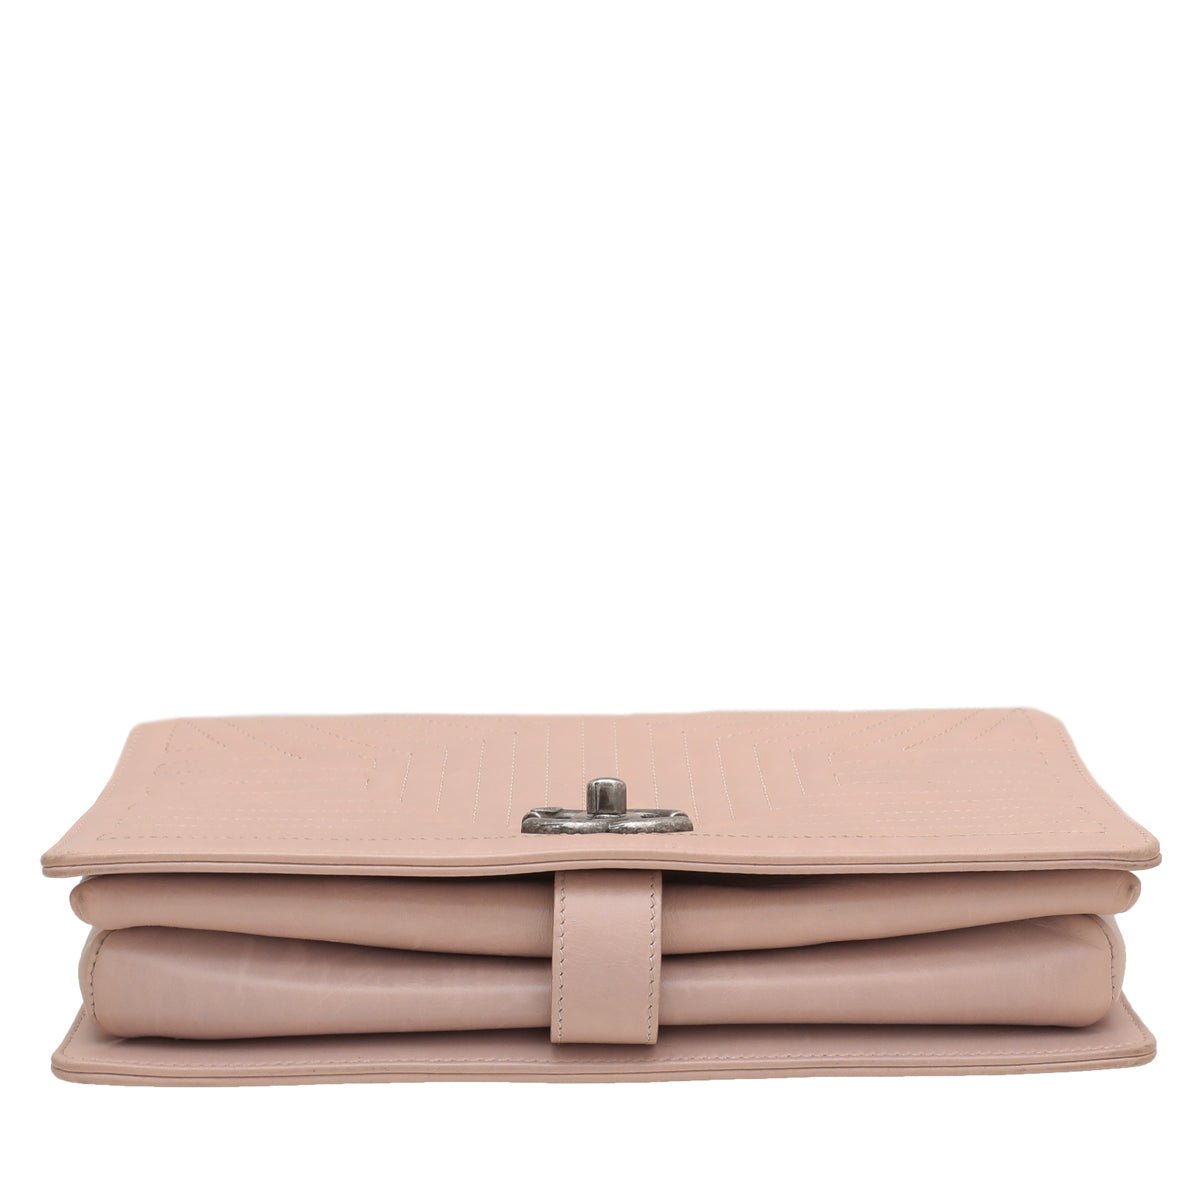 The Closet - Chanel Beige Poudre Geometric CC Full Flap Bag | The Closet